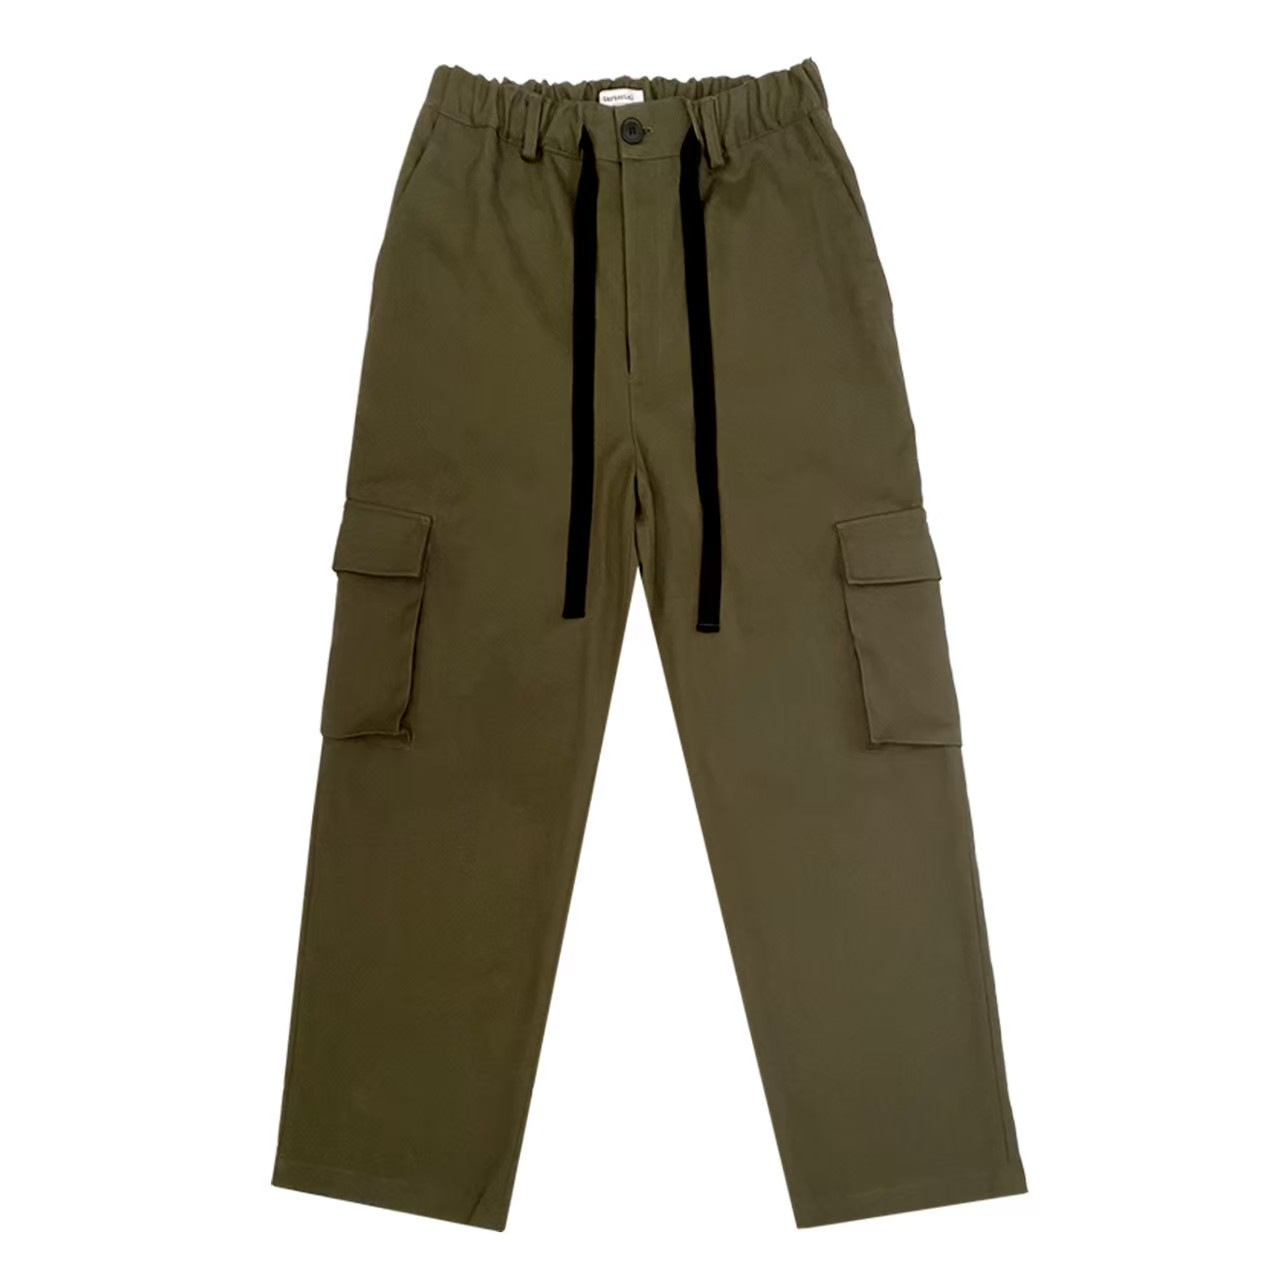 Zartorial Cargo Trousers (Military Green)